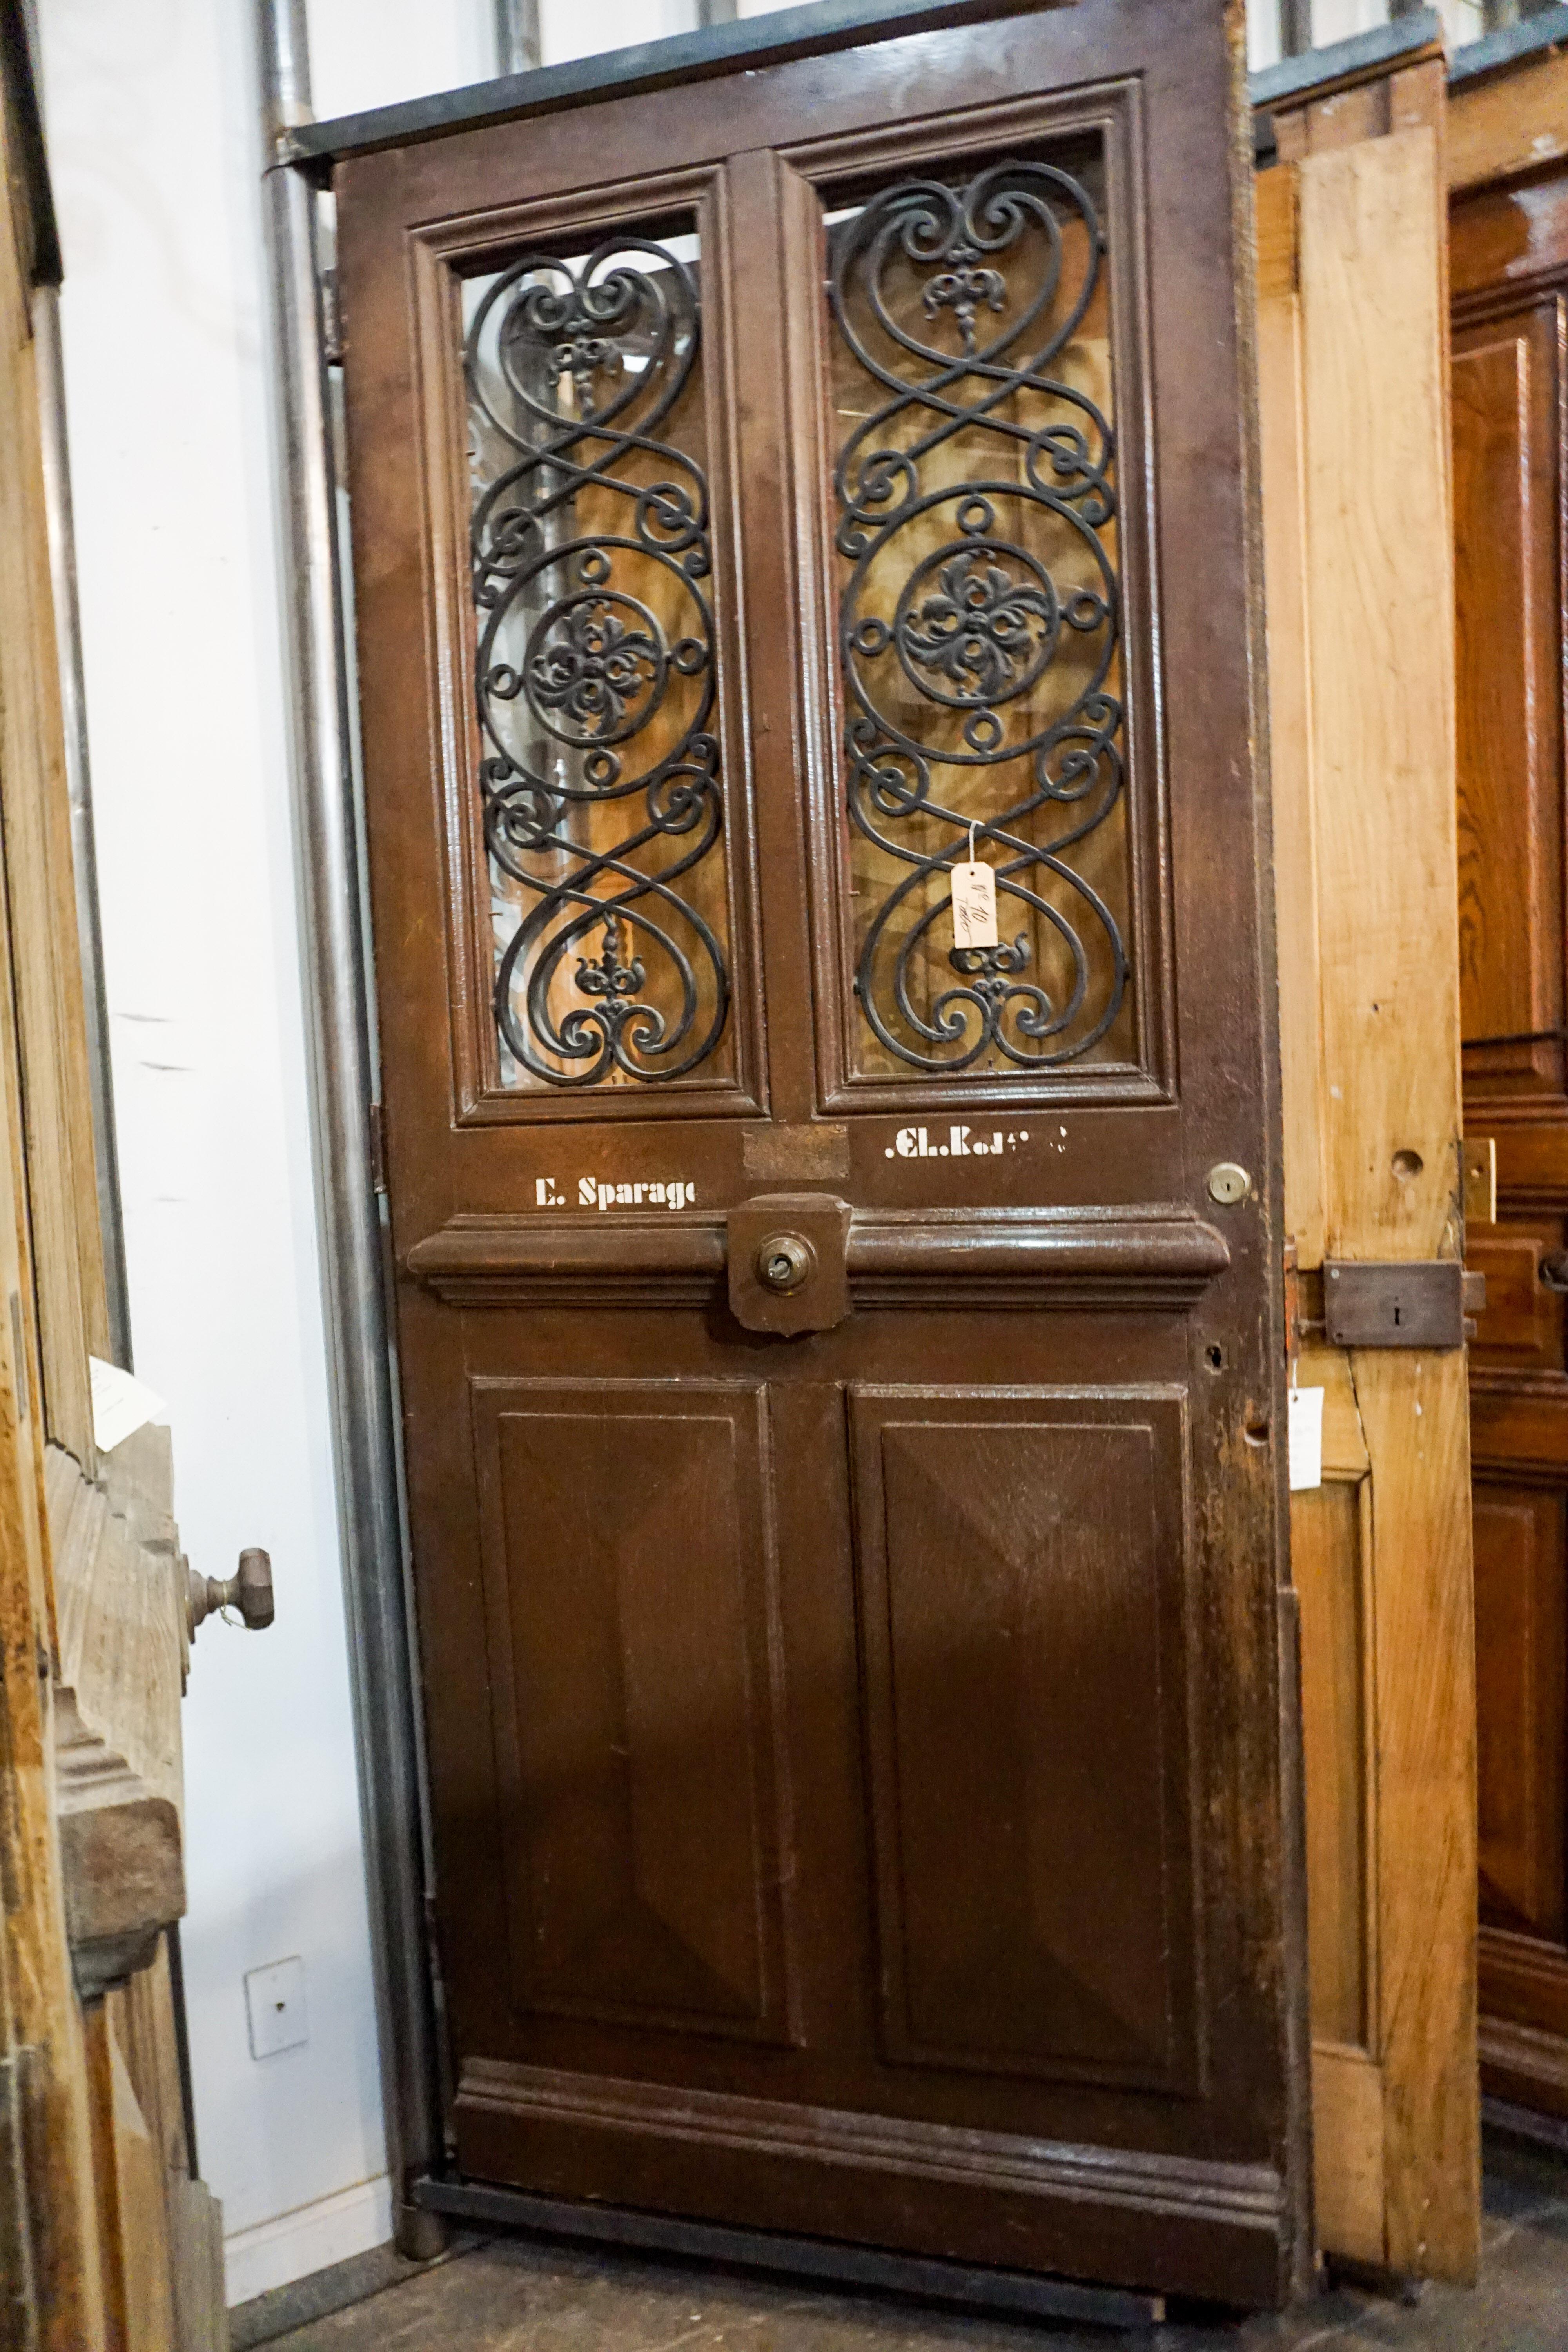 Unique single center pull oak door with ironwork.

Origin: France, circa 1870

Measurements: 41 1/4